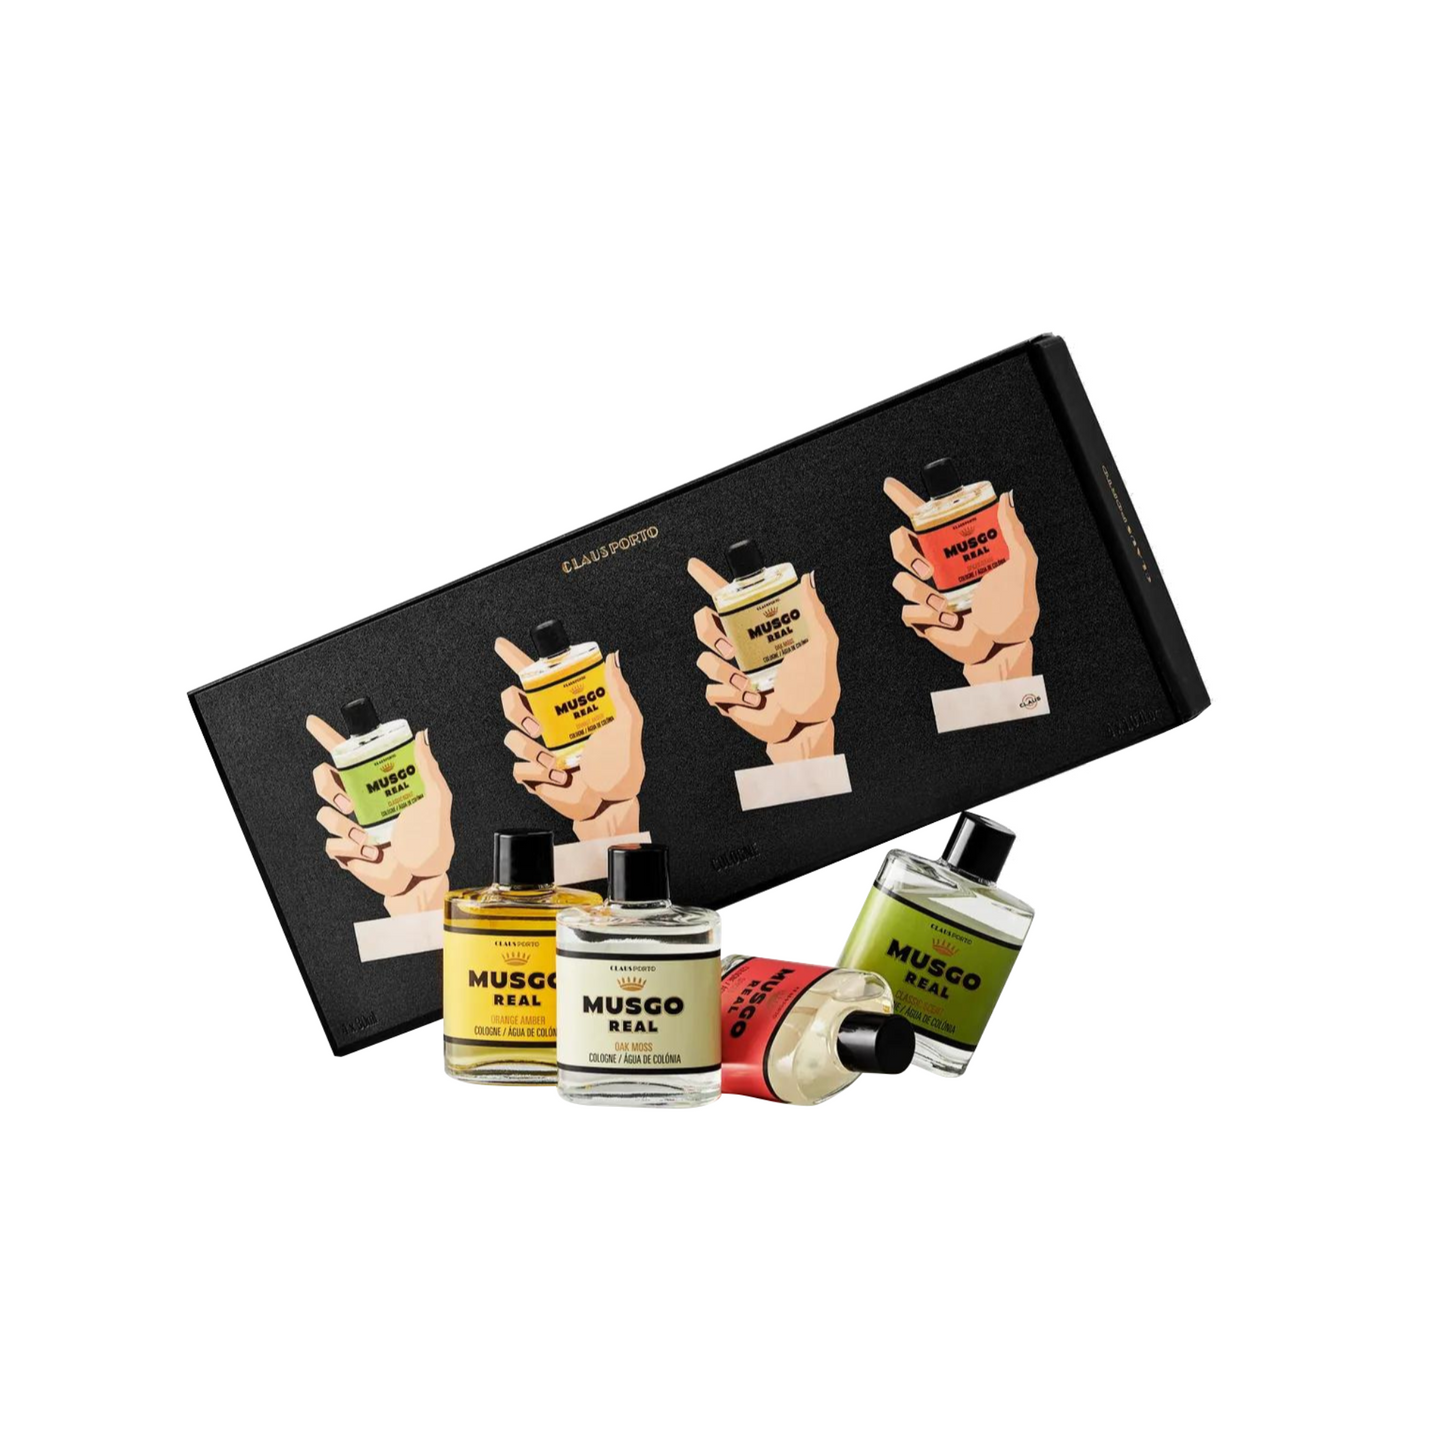 Musgo Real Gift Box of Mini Colognes